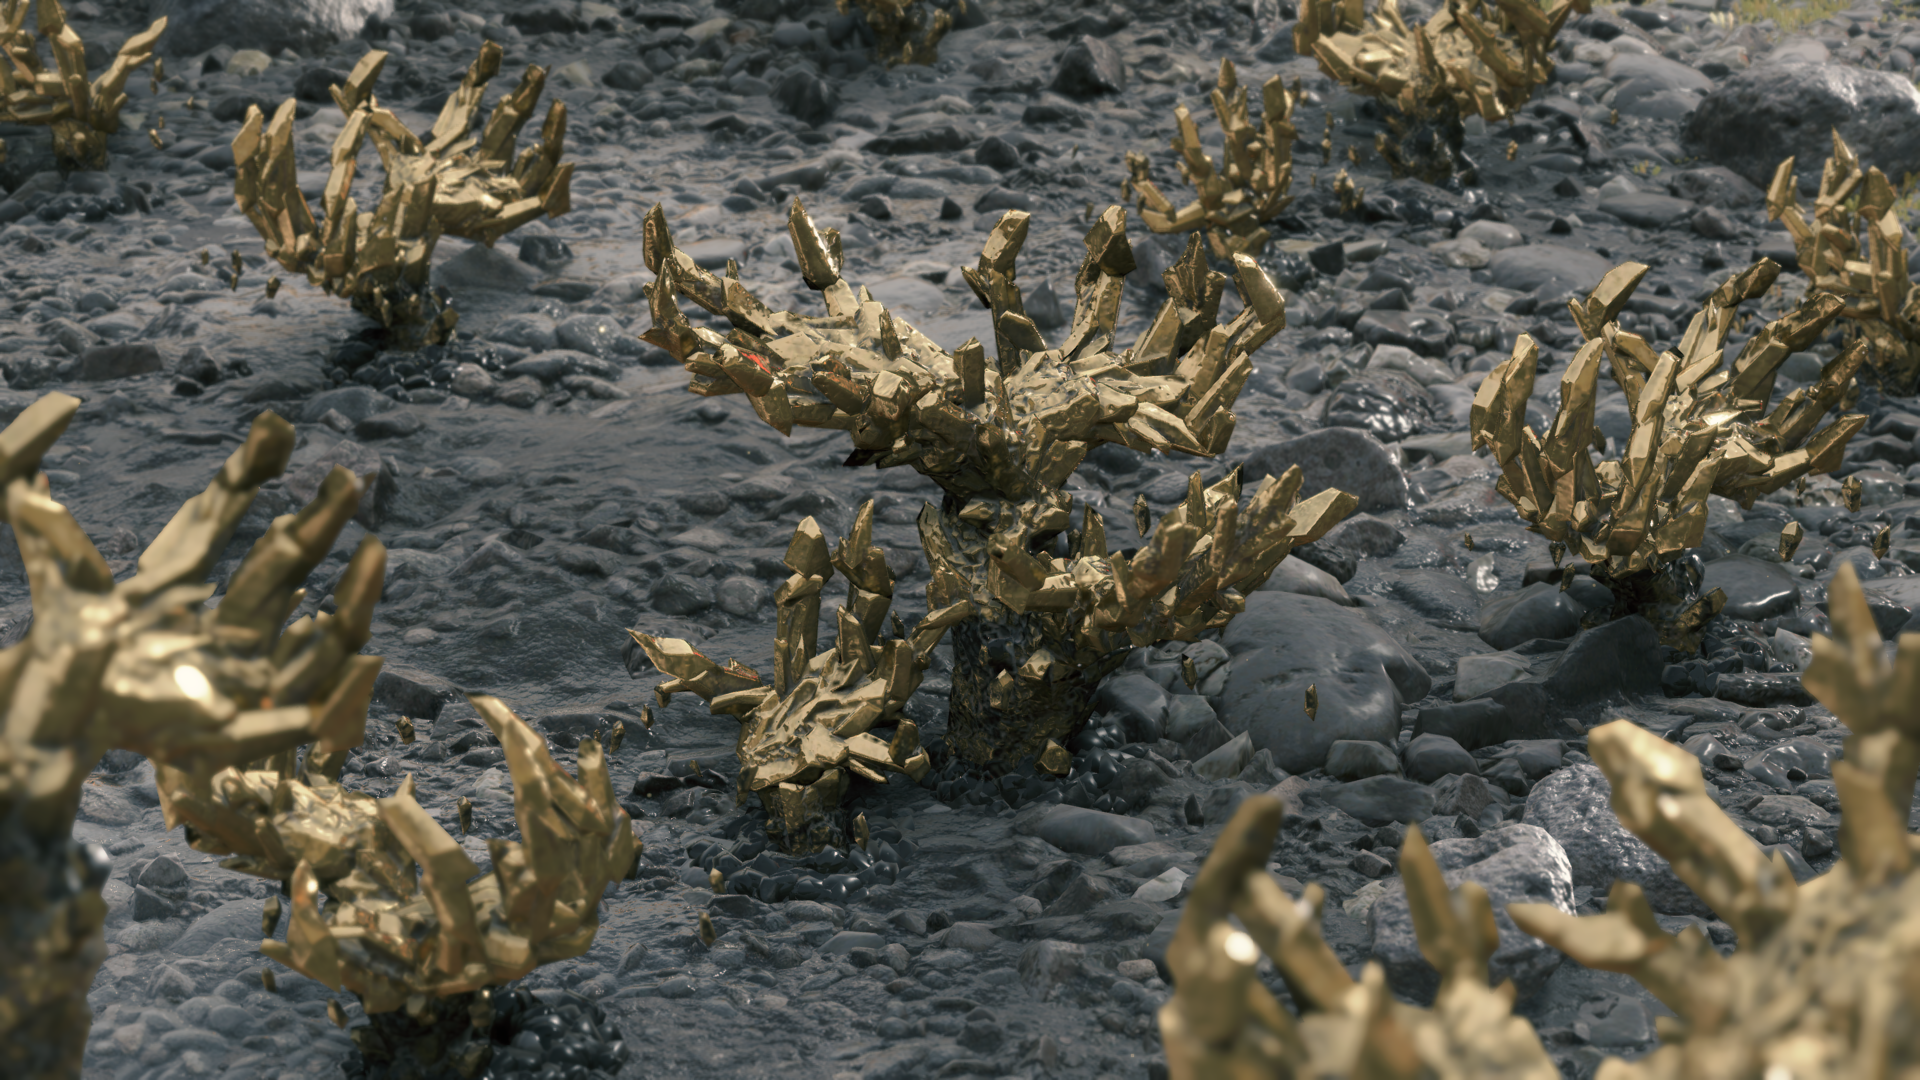 General 1920x1080 Kojima Productions Death Stranding video games screen shot gold hands rocks CGI